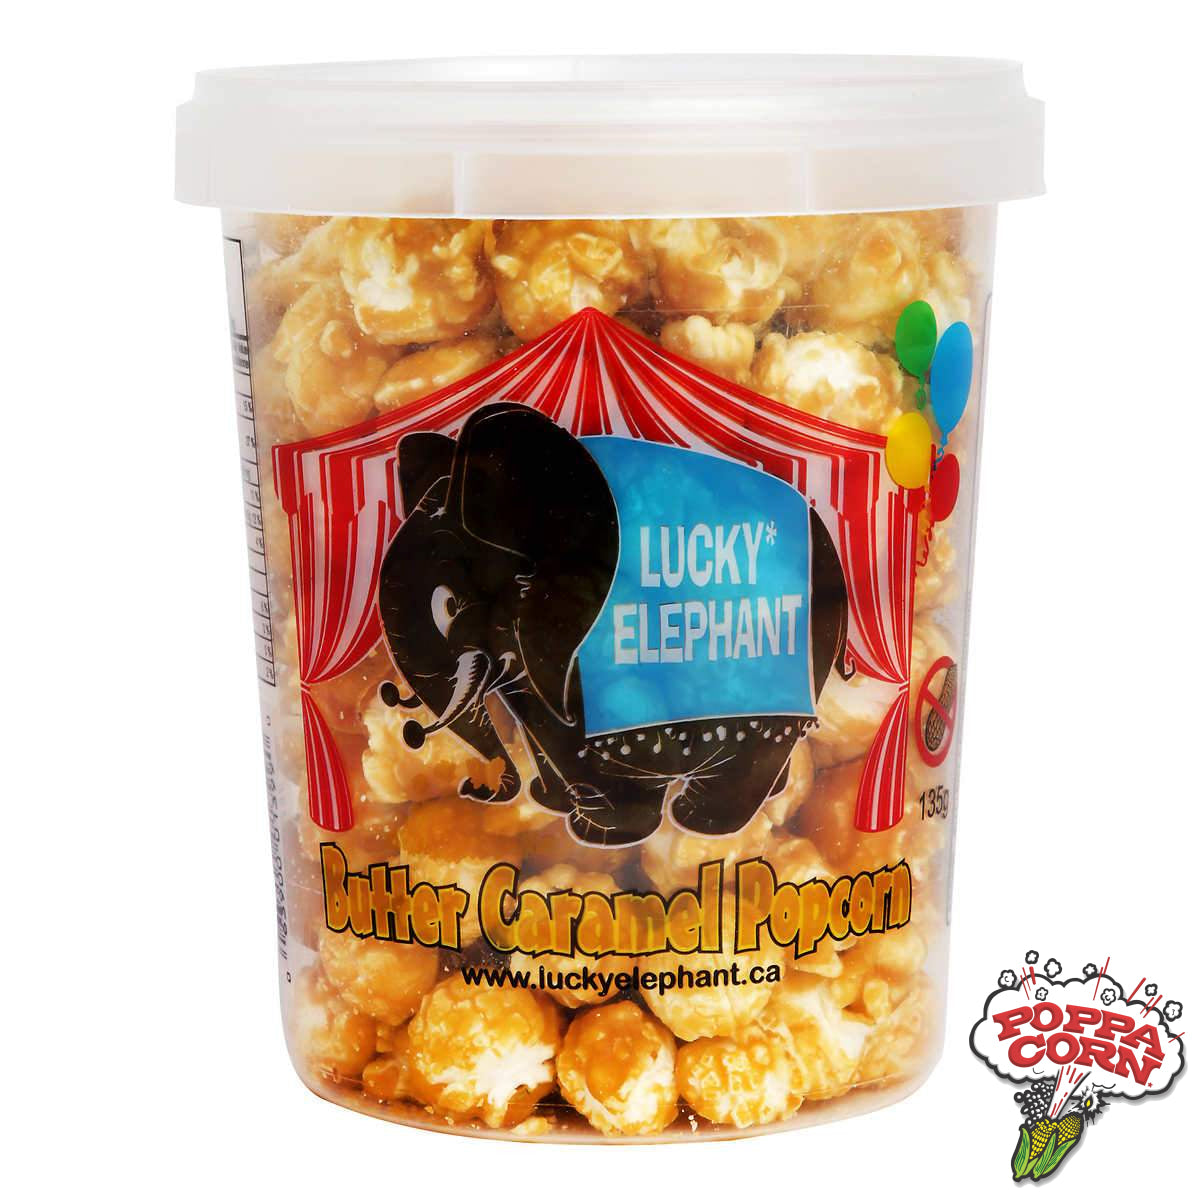 Lucky Elephant Butter Caramel Corn - Fresh & Tasty! x 24 Units - Poppa Corn Corp